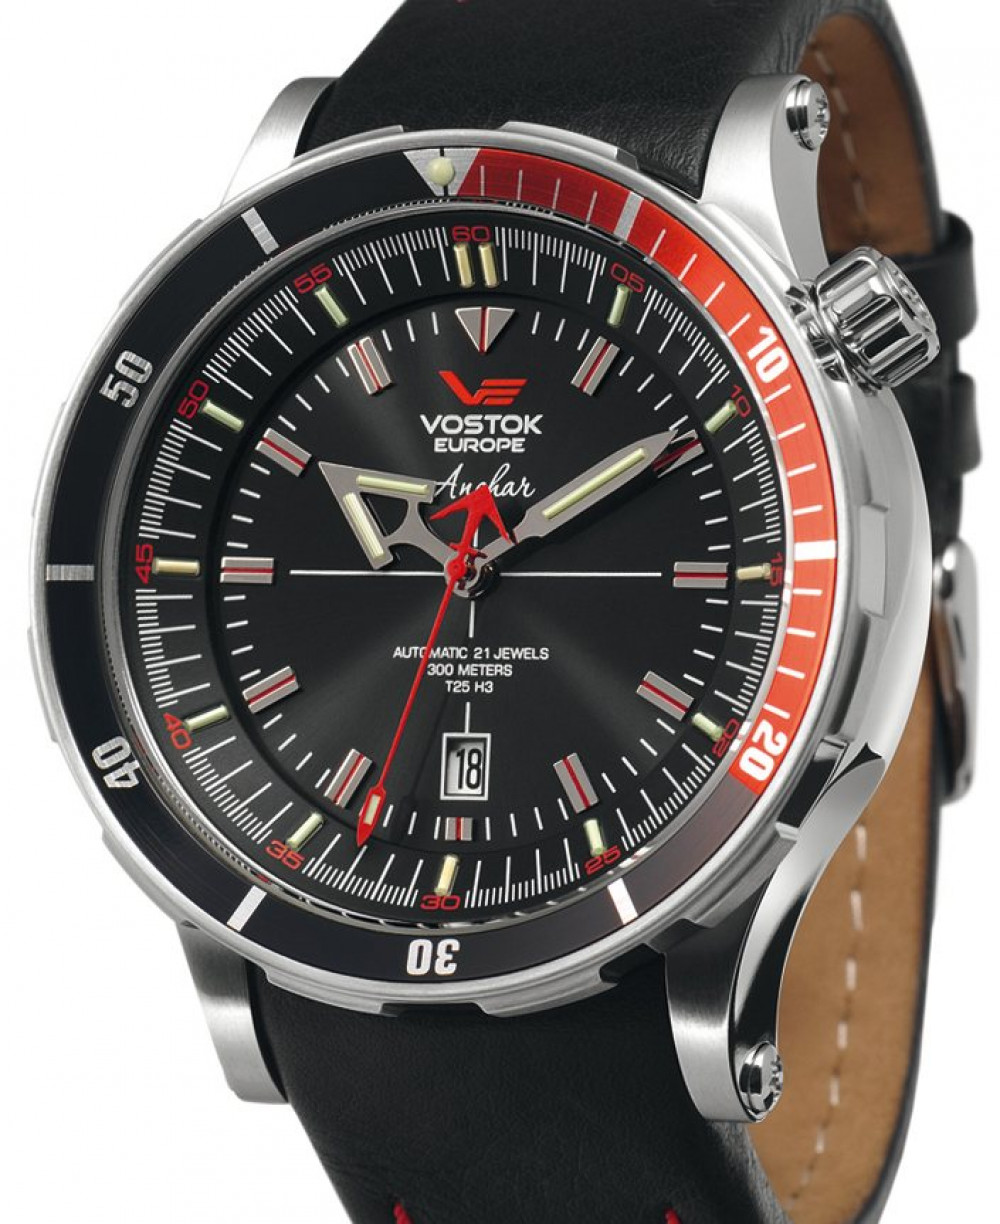 Zegarek firmy Vostok Europe, model Anchar